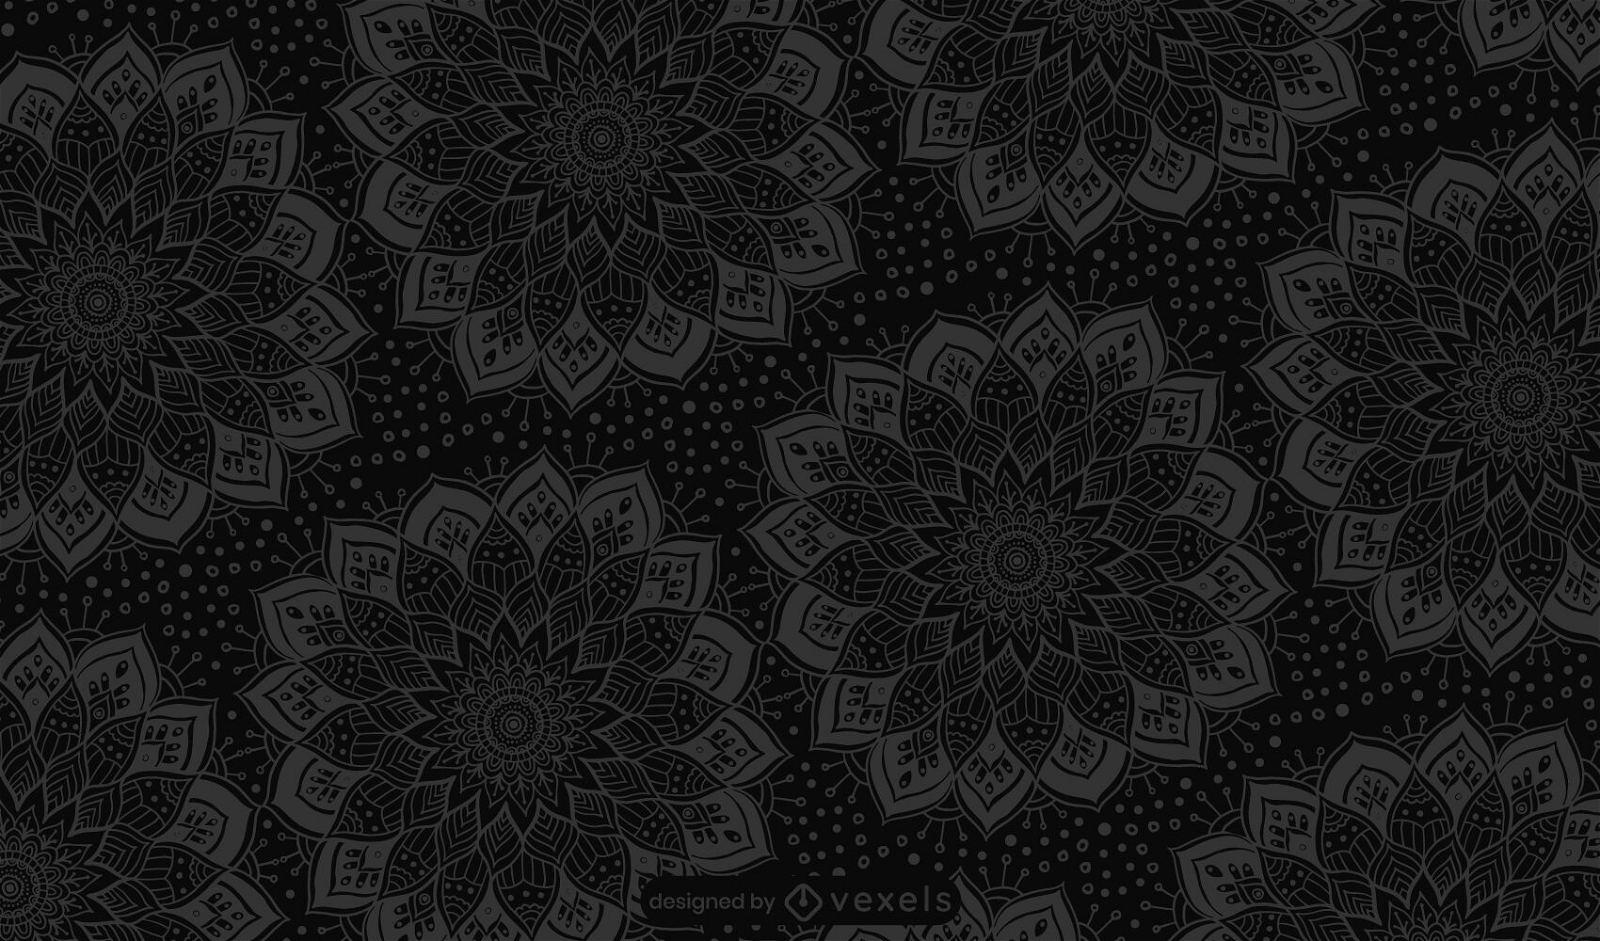 Mandala flowers decorative pattern design